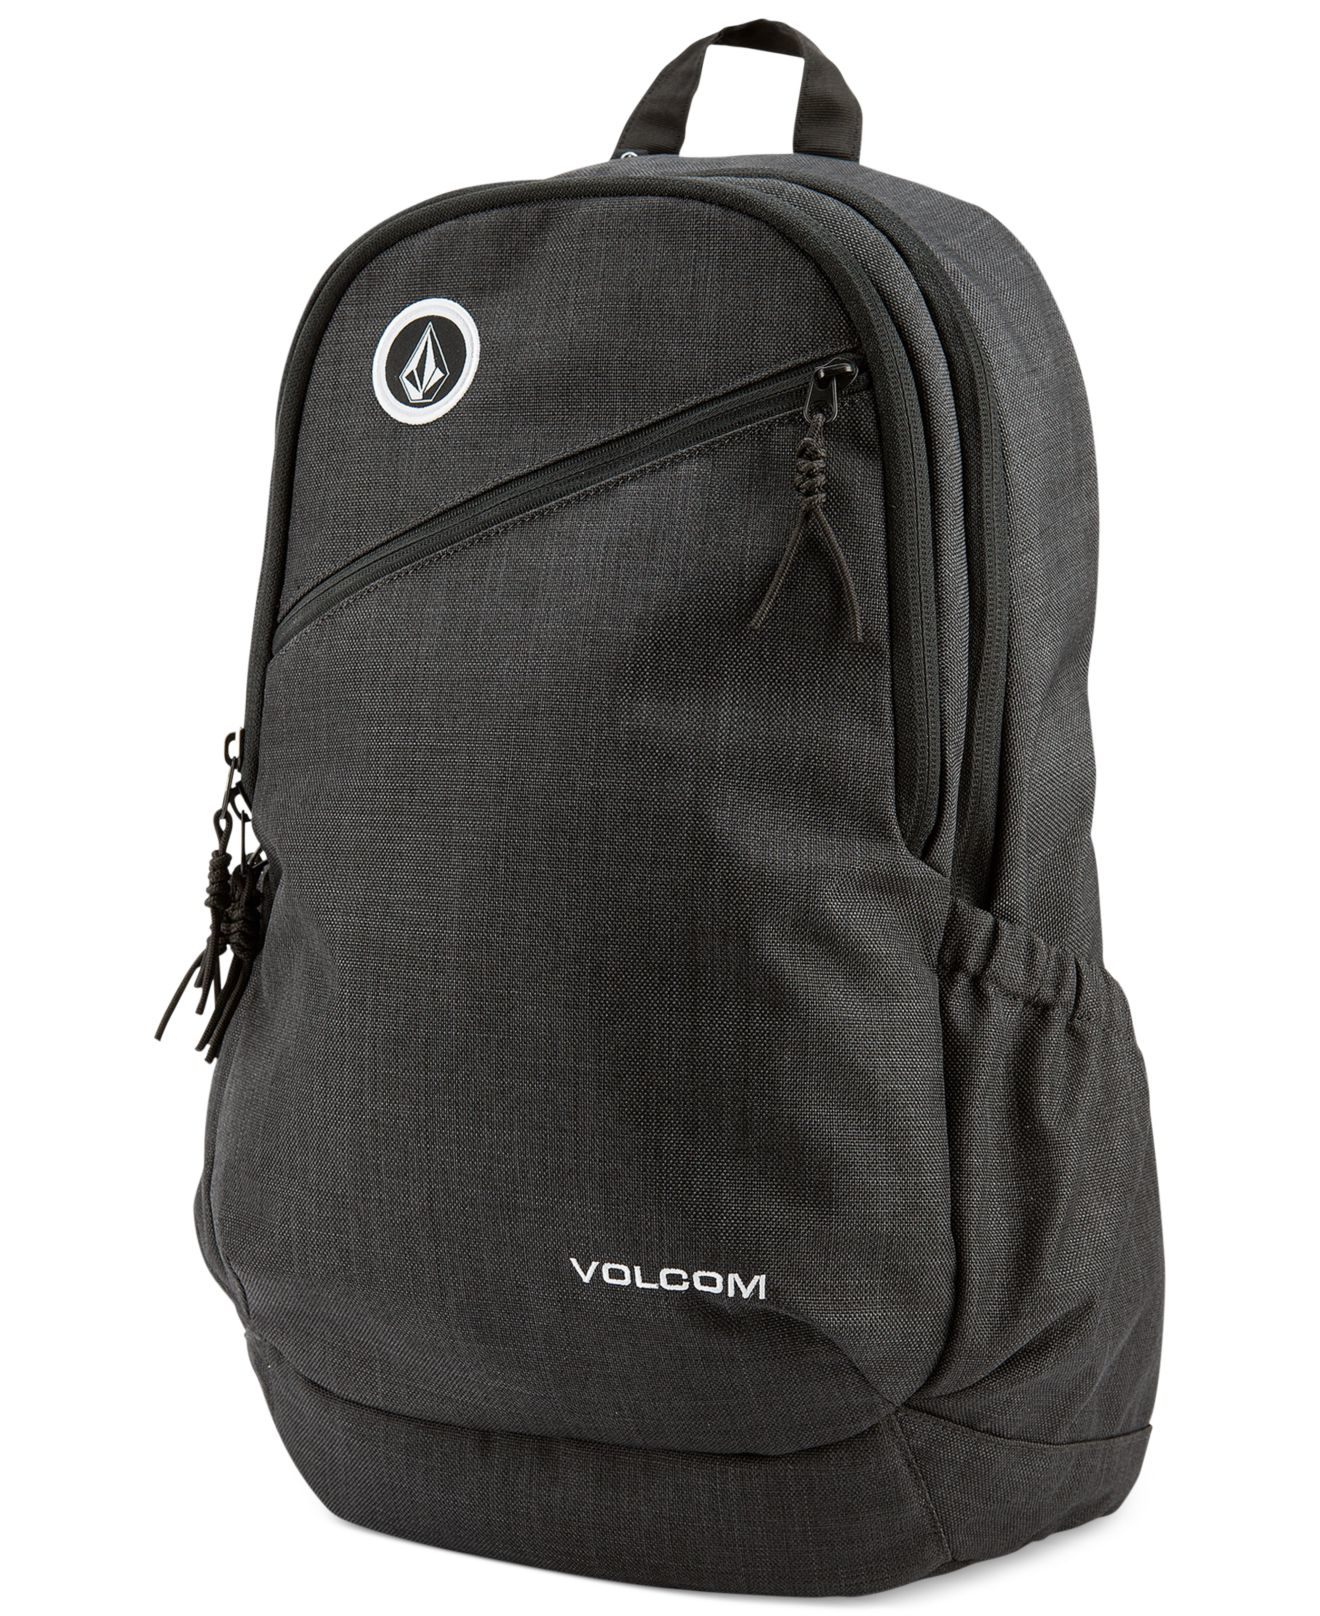 Lyst - Volcom Substrate Backpack in Black for Men